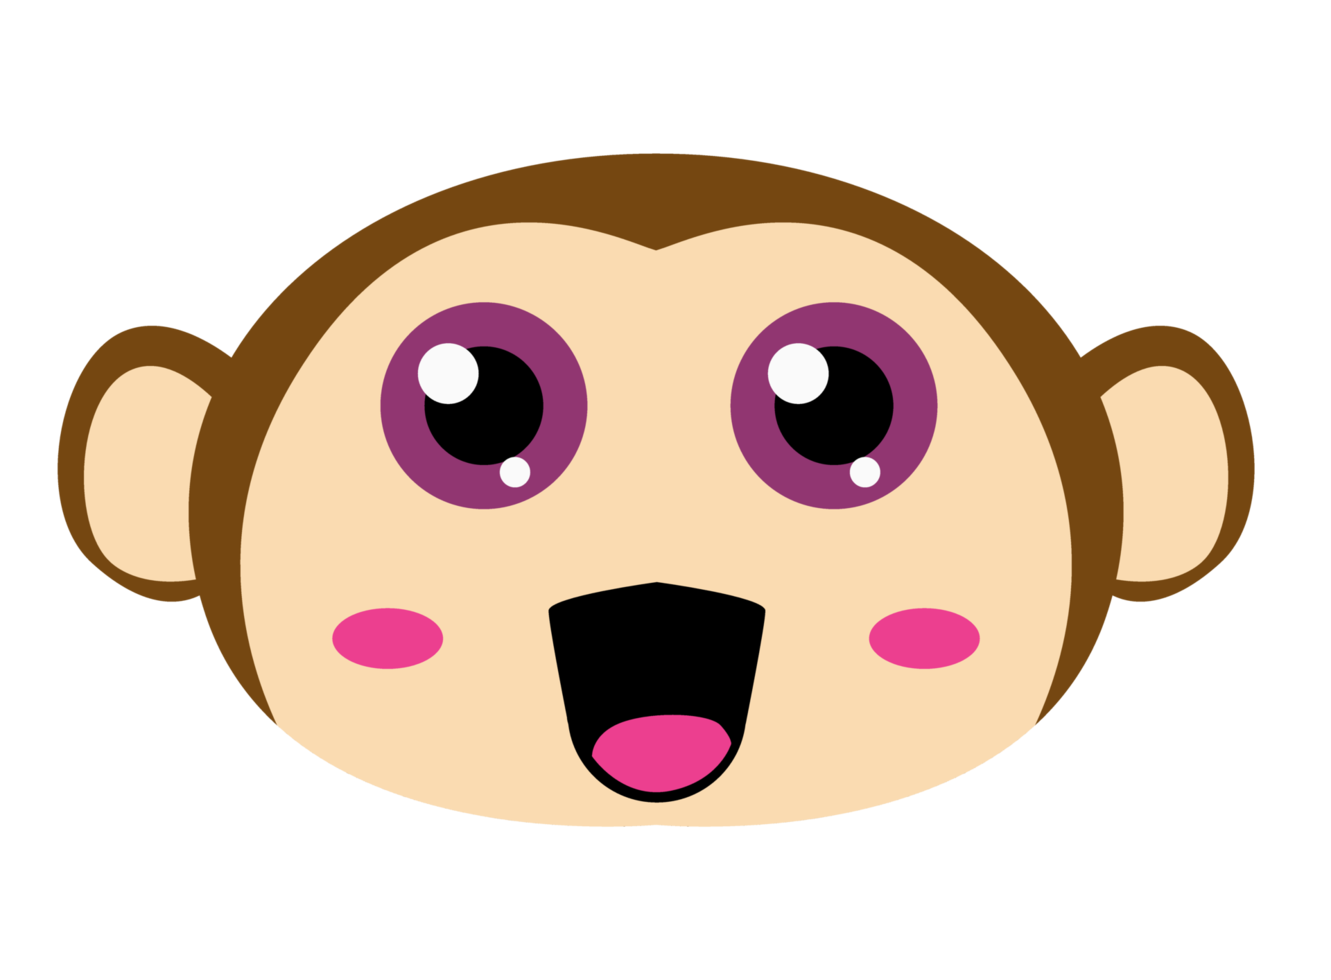 dibujos animados de cabeza de animal - mono png